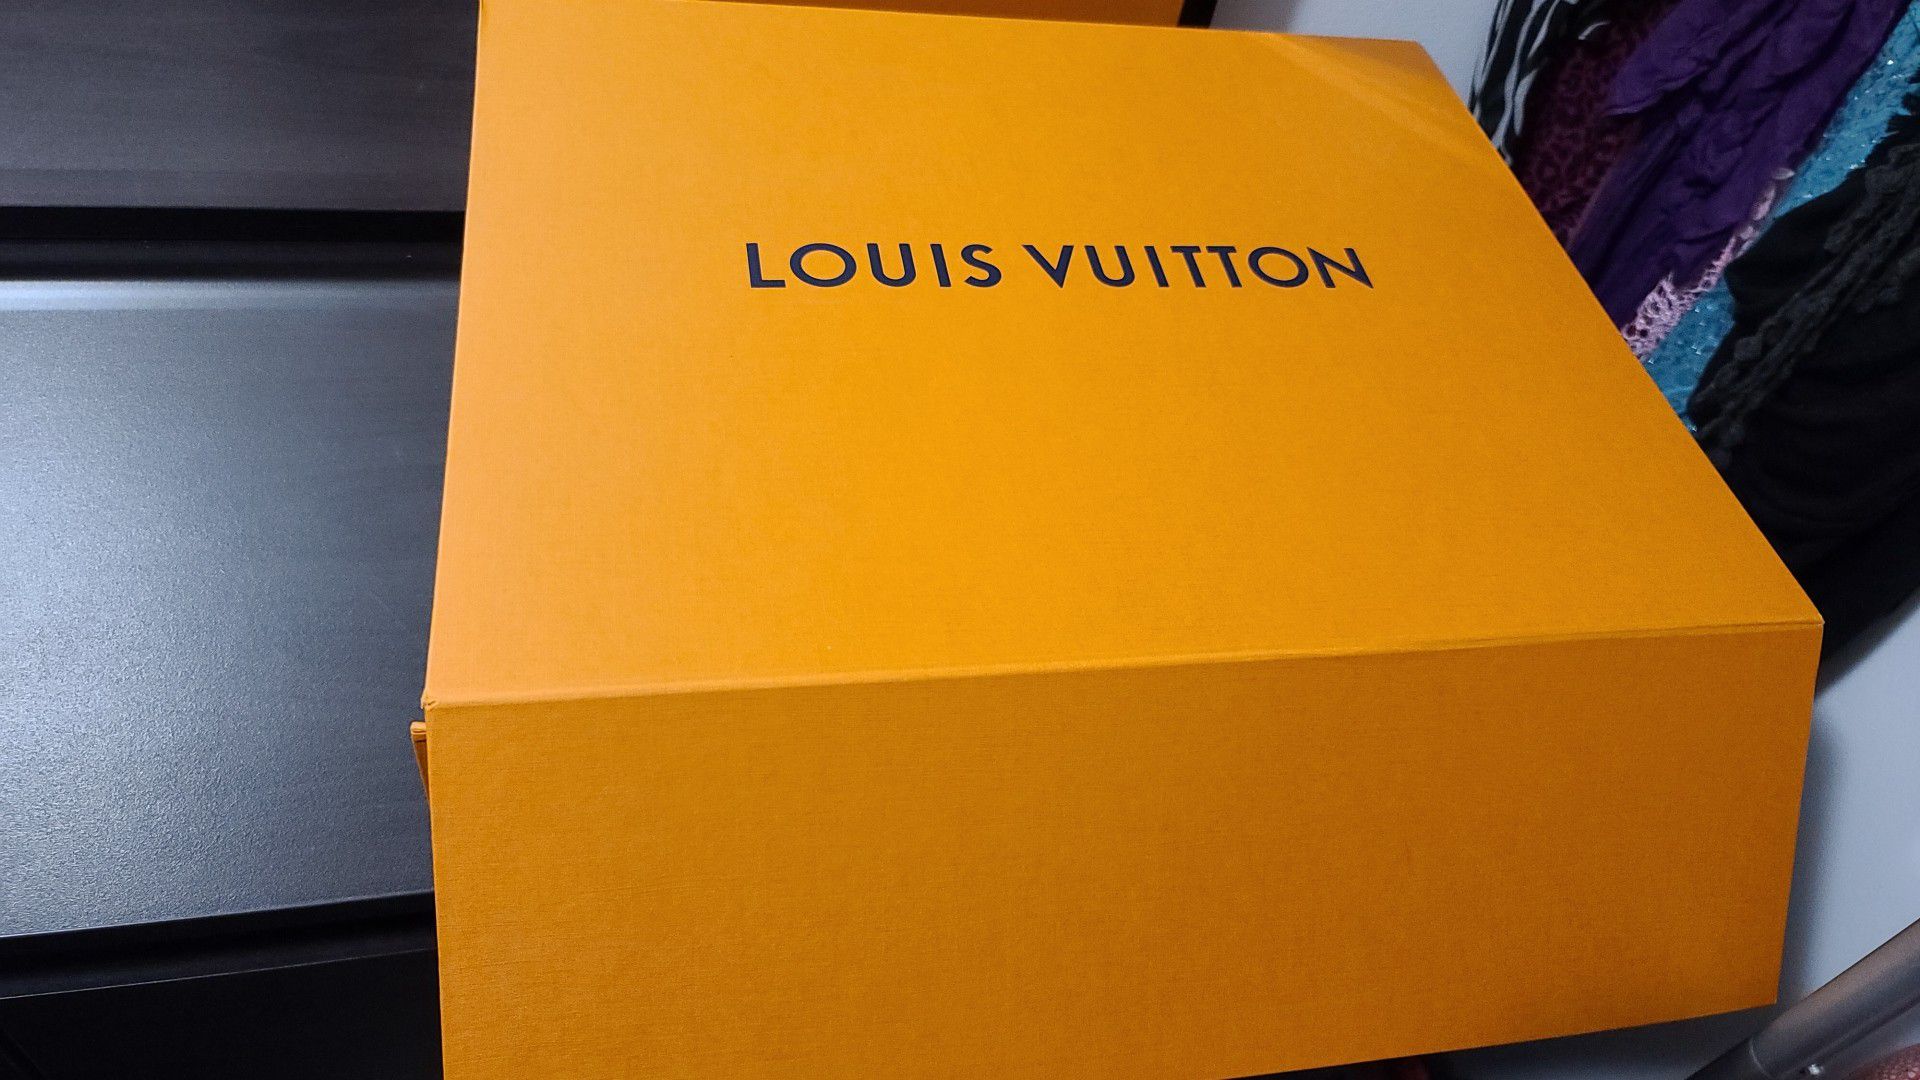 Louis Vuitton, Other, Louis Vuitton Box Original